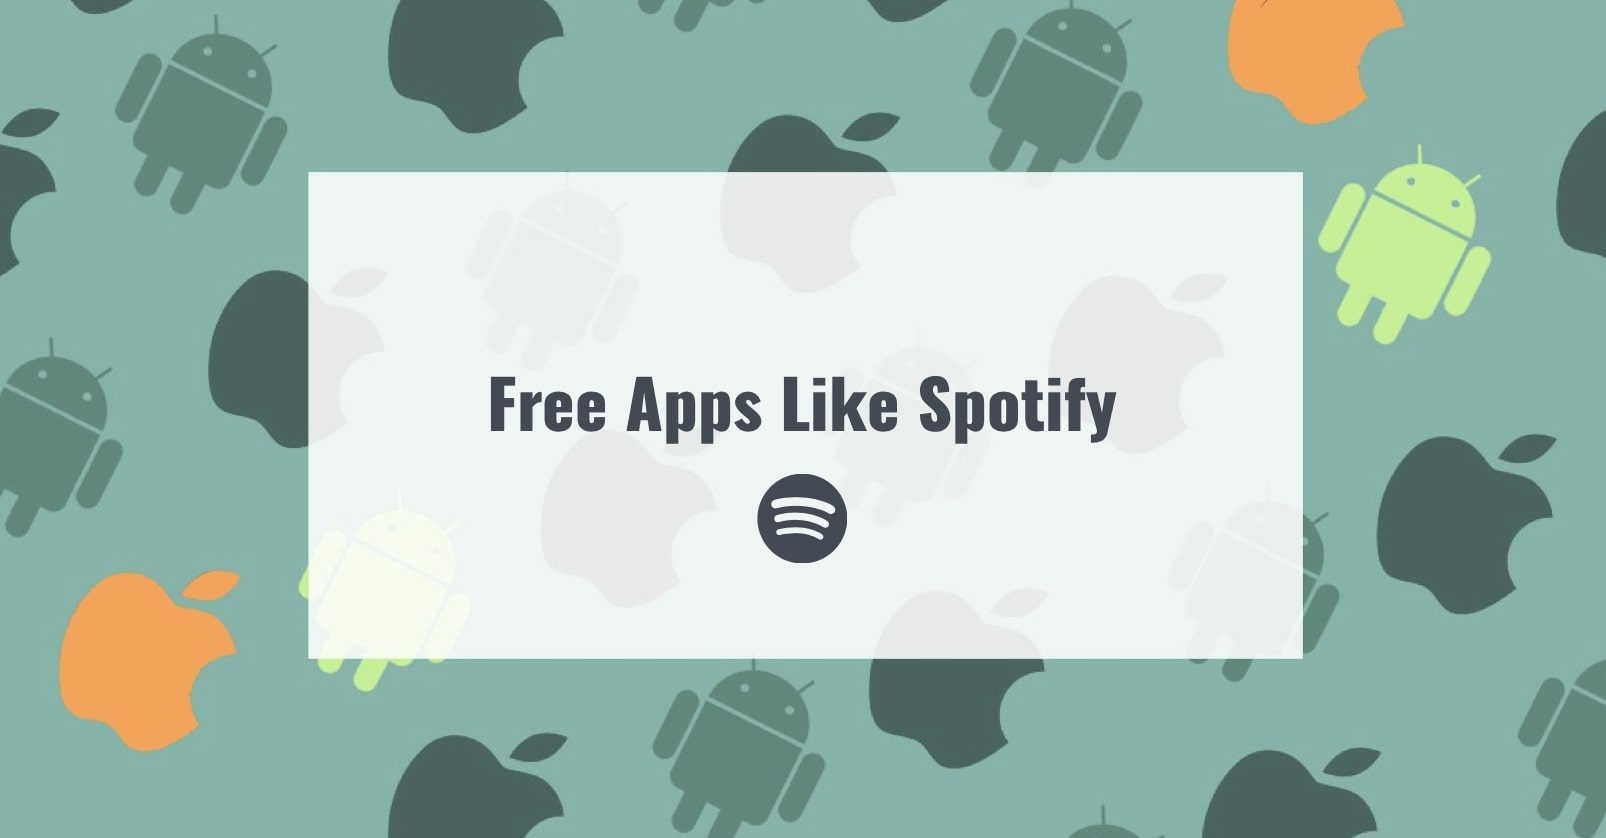 Free Apps Like Spotify